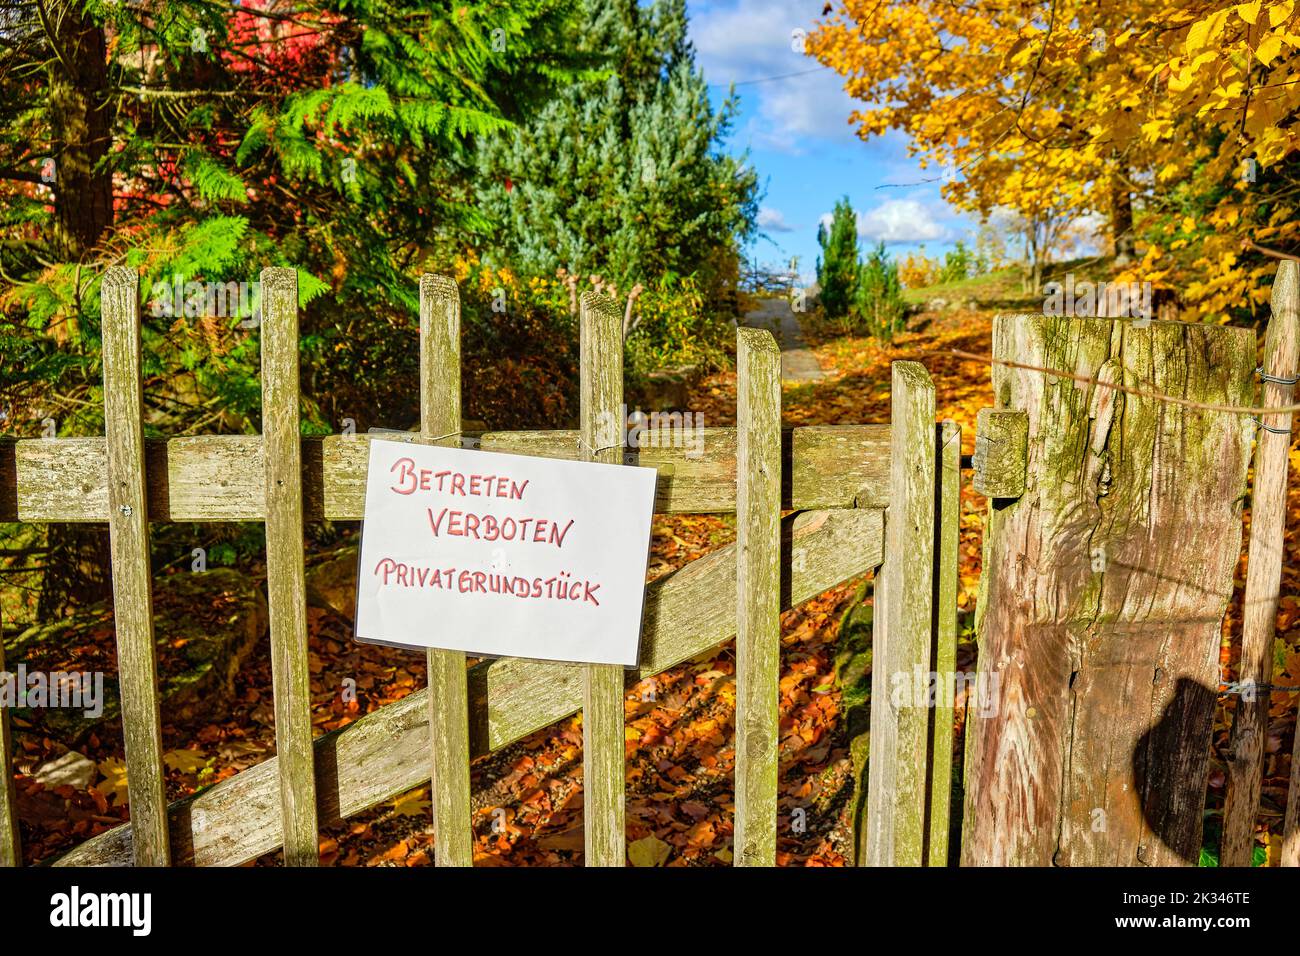 Betreten verboten Privatgrundstück, Schild an einem Gartentor aus Holzlatten. Betreten verboten Privatgrundstück (Sin propiedad privada), si Foto de stock